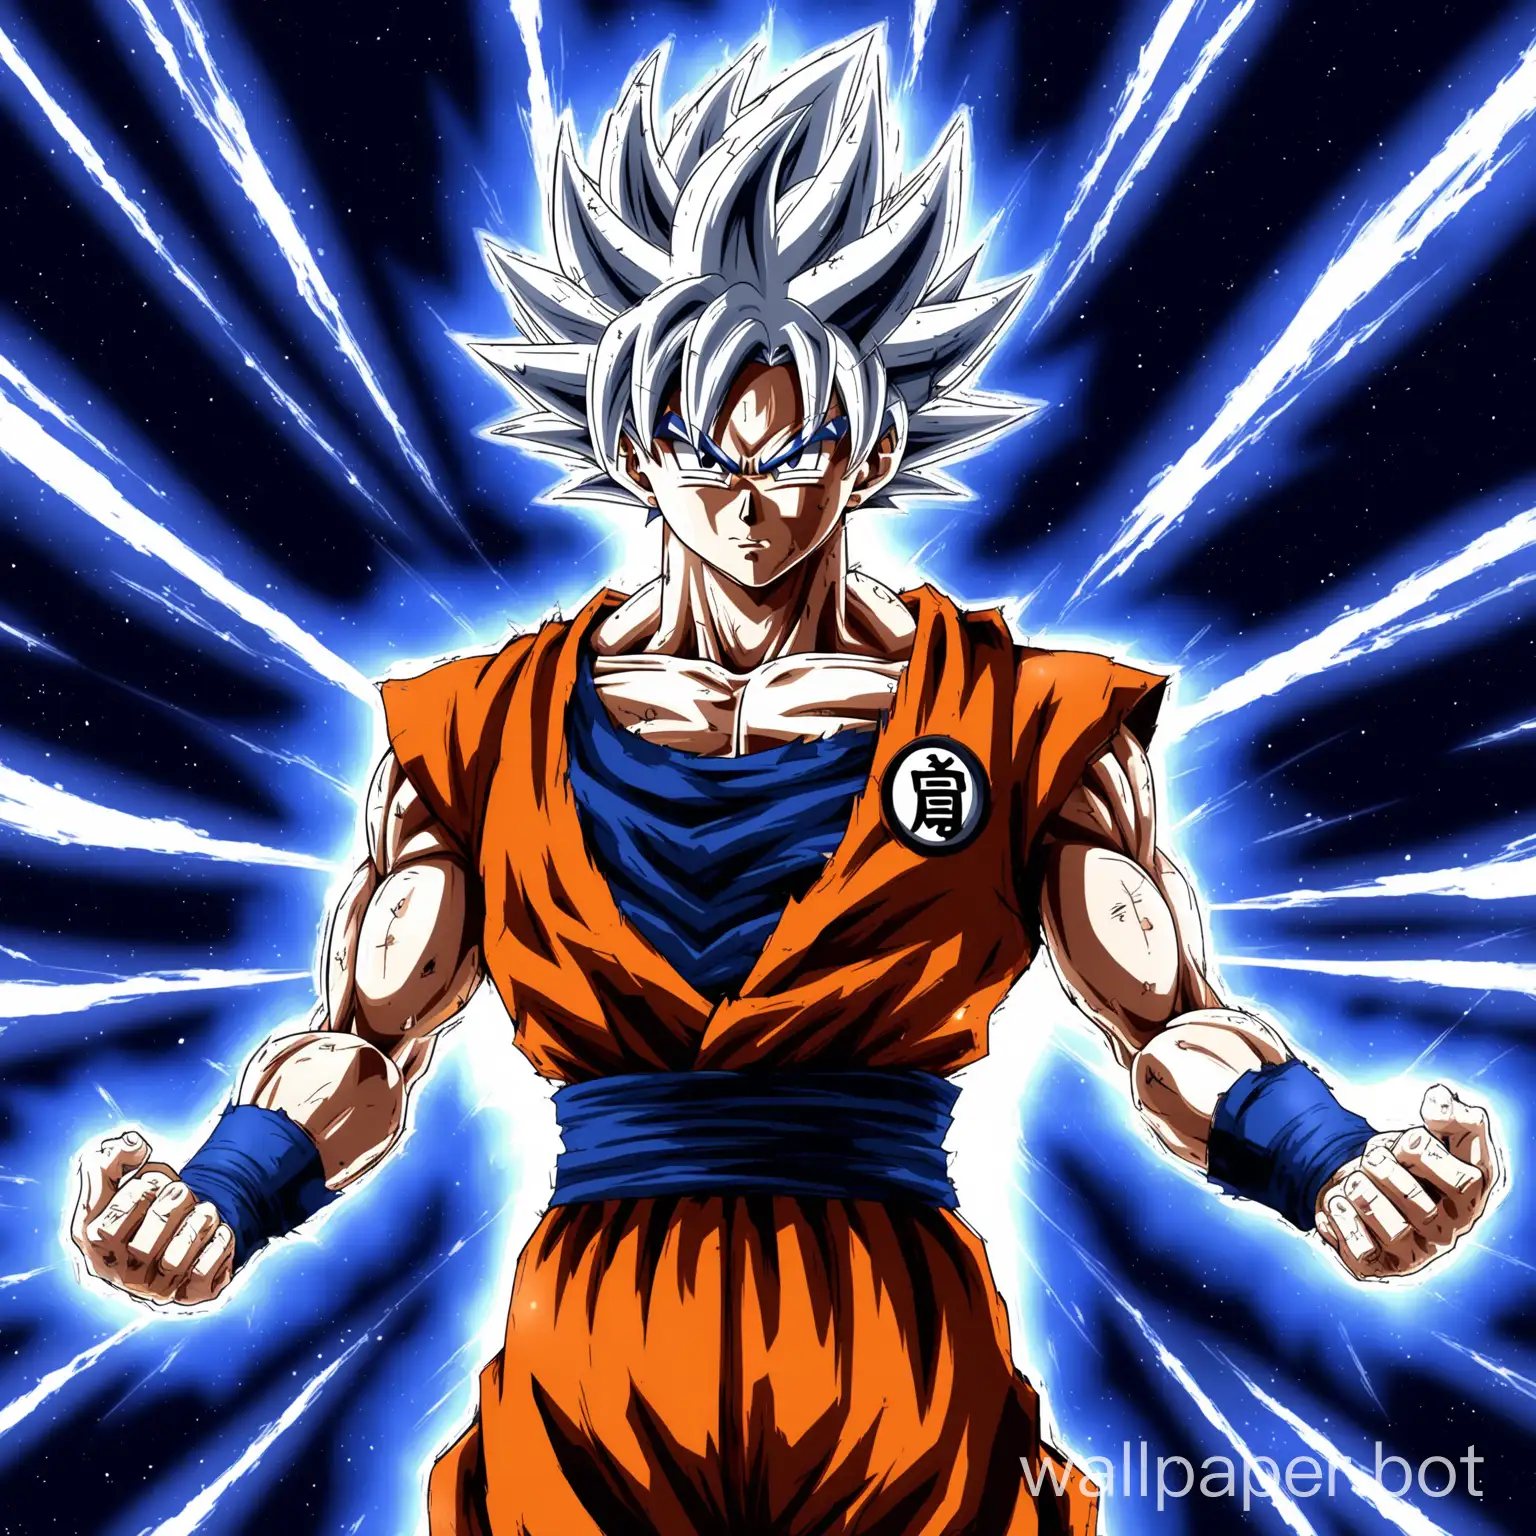 Goku-in-Ultra-Instinct-Form-from-Dragon-Ball-Super